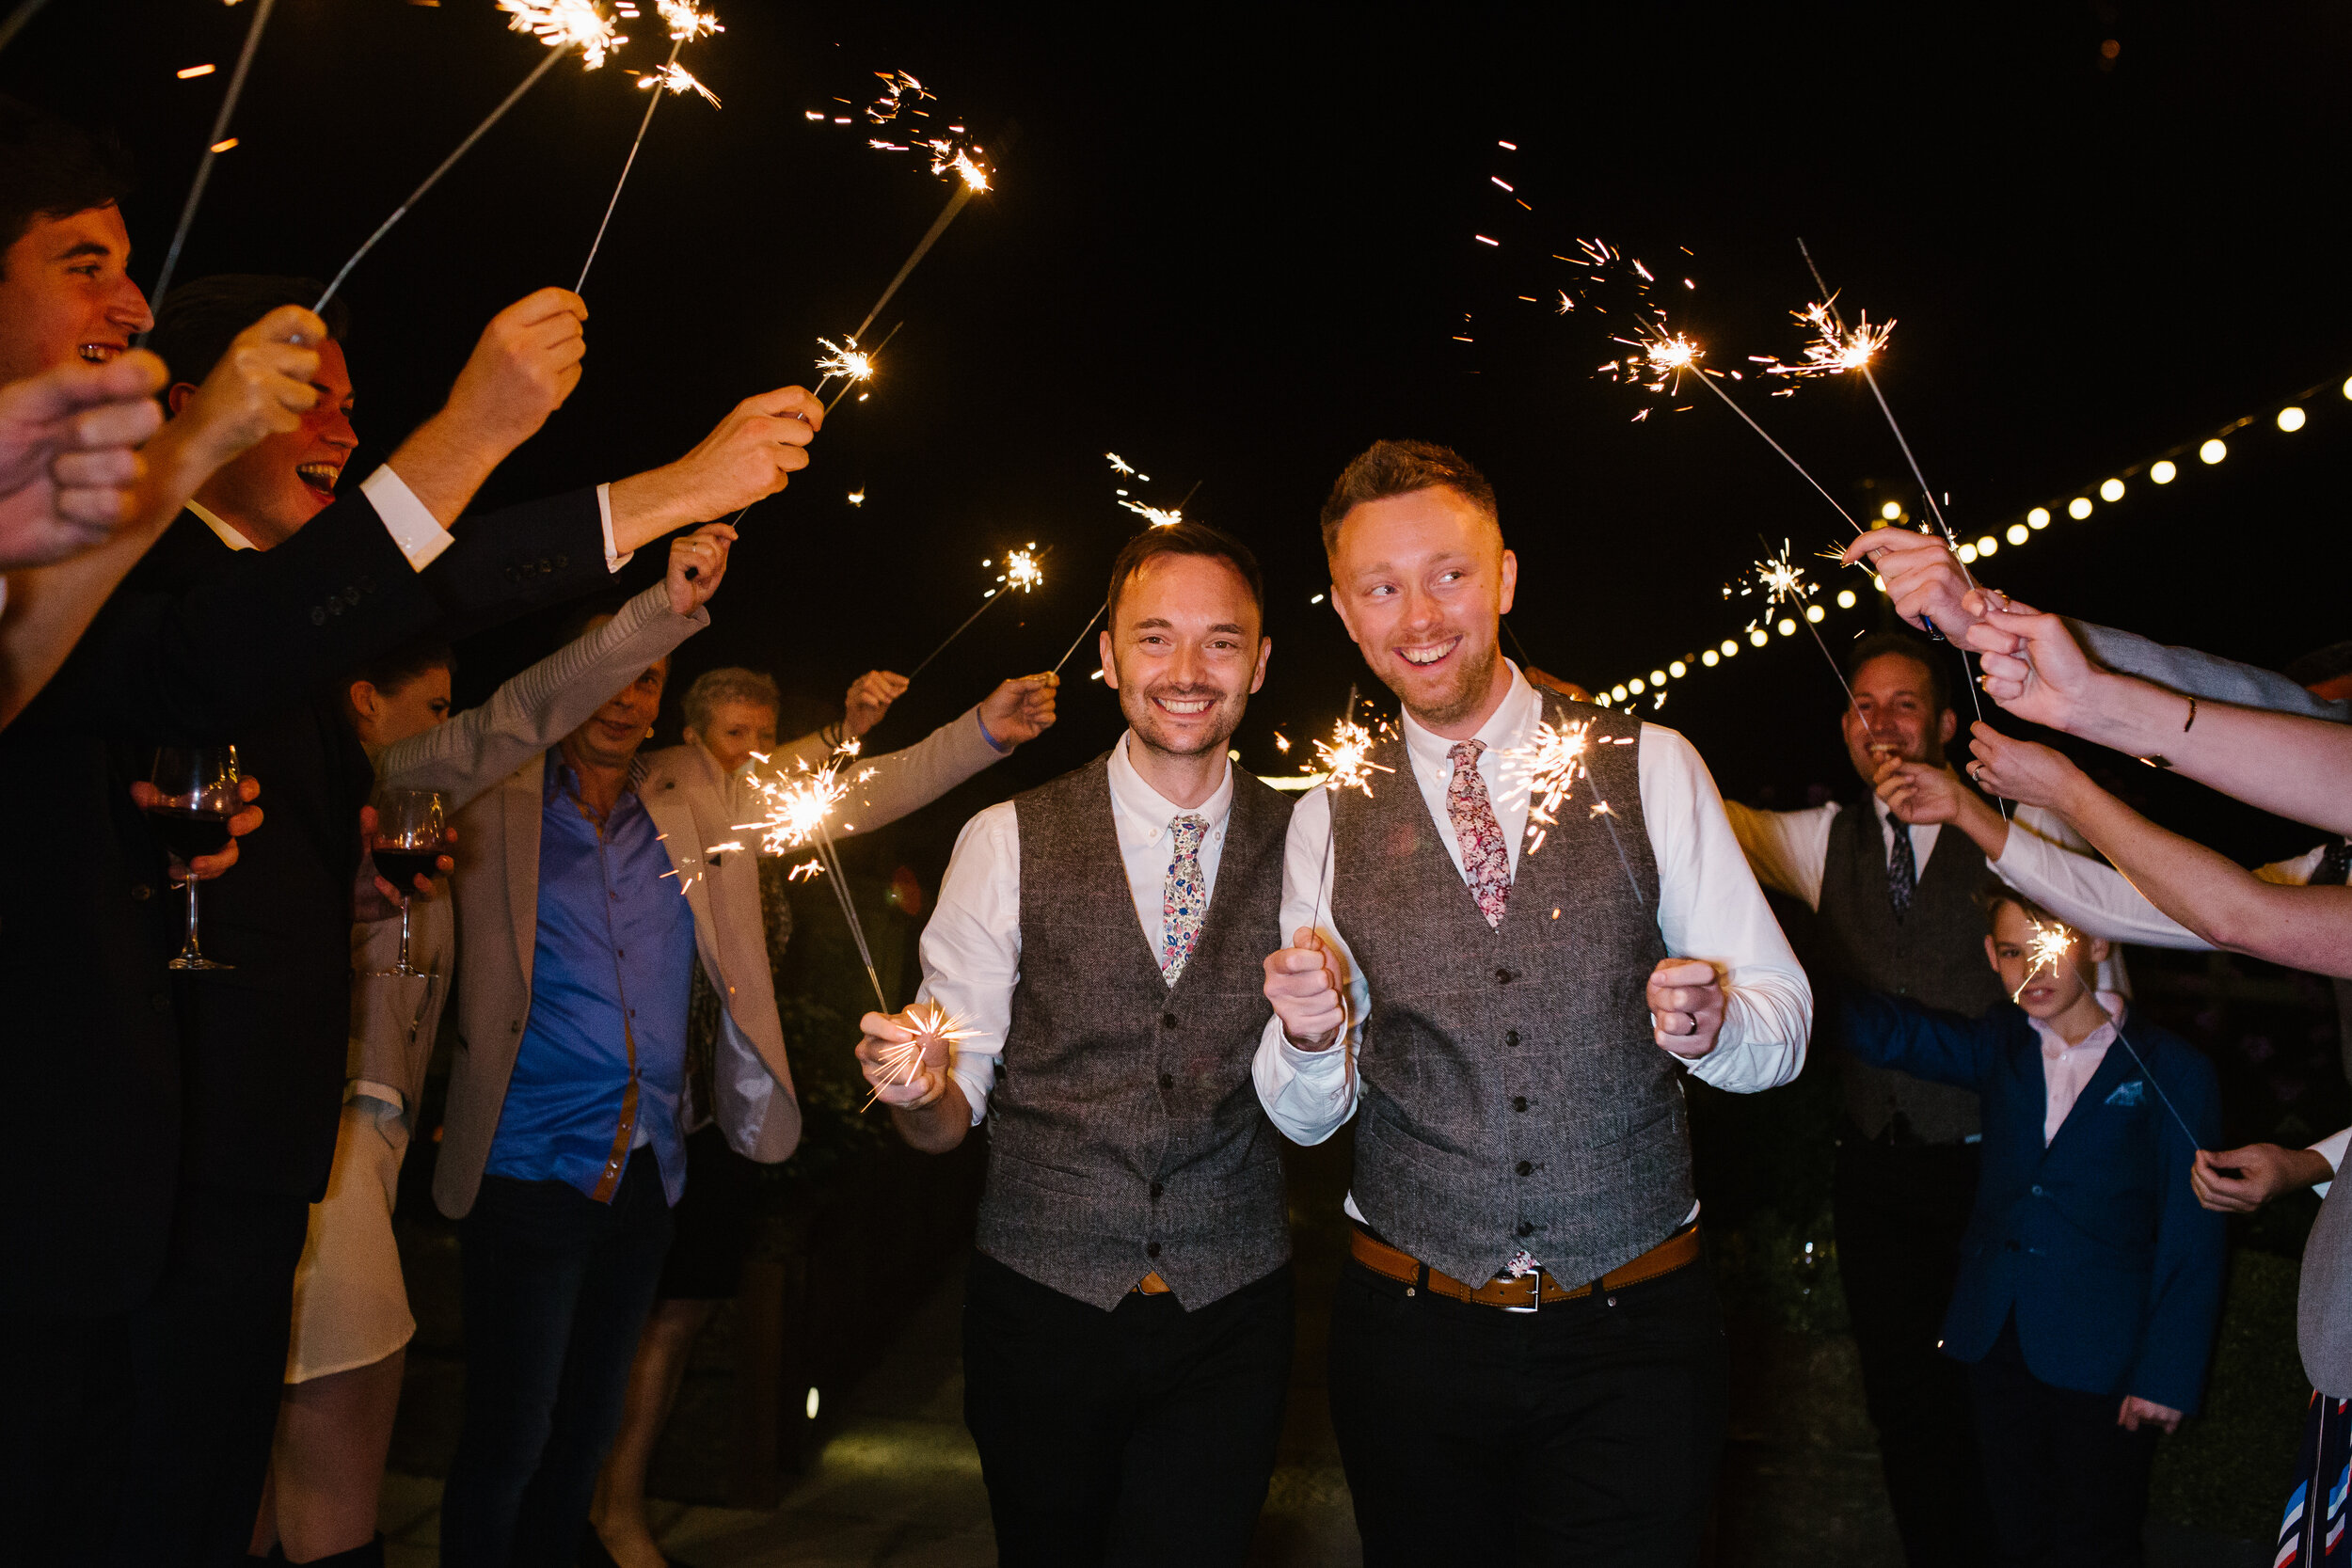 grooms walk through an aisle of sparklers